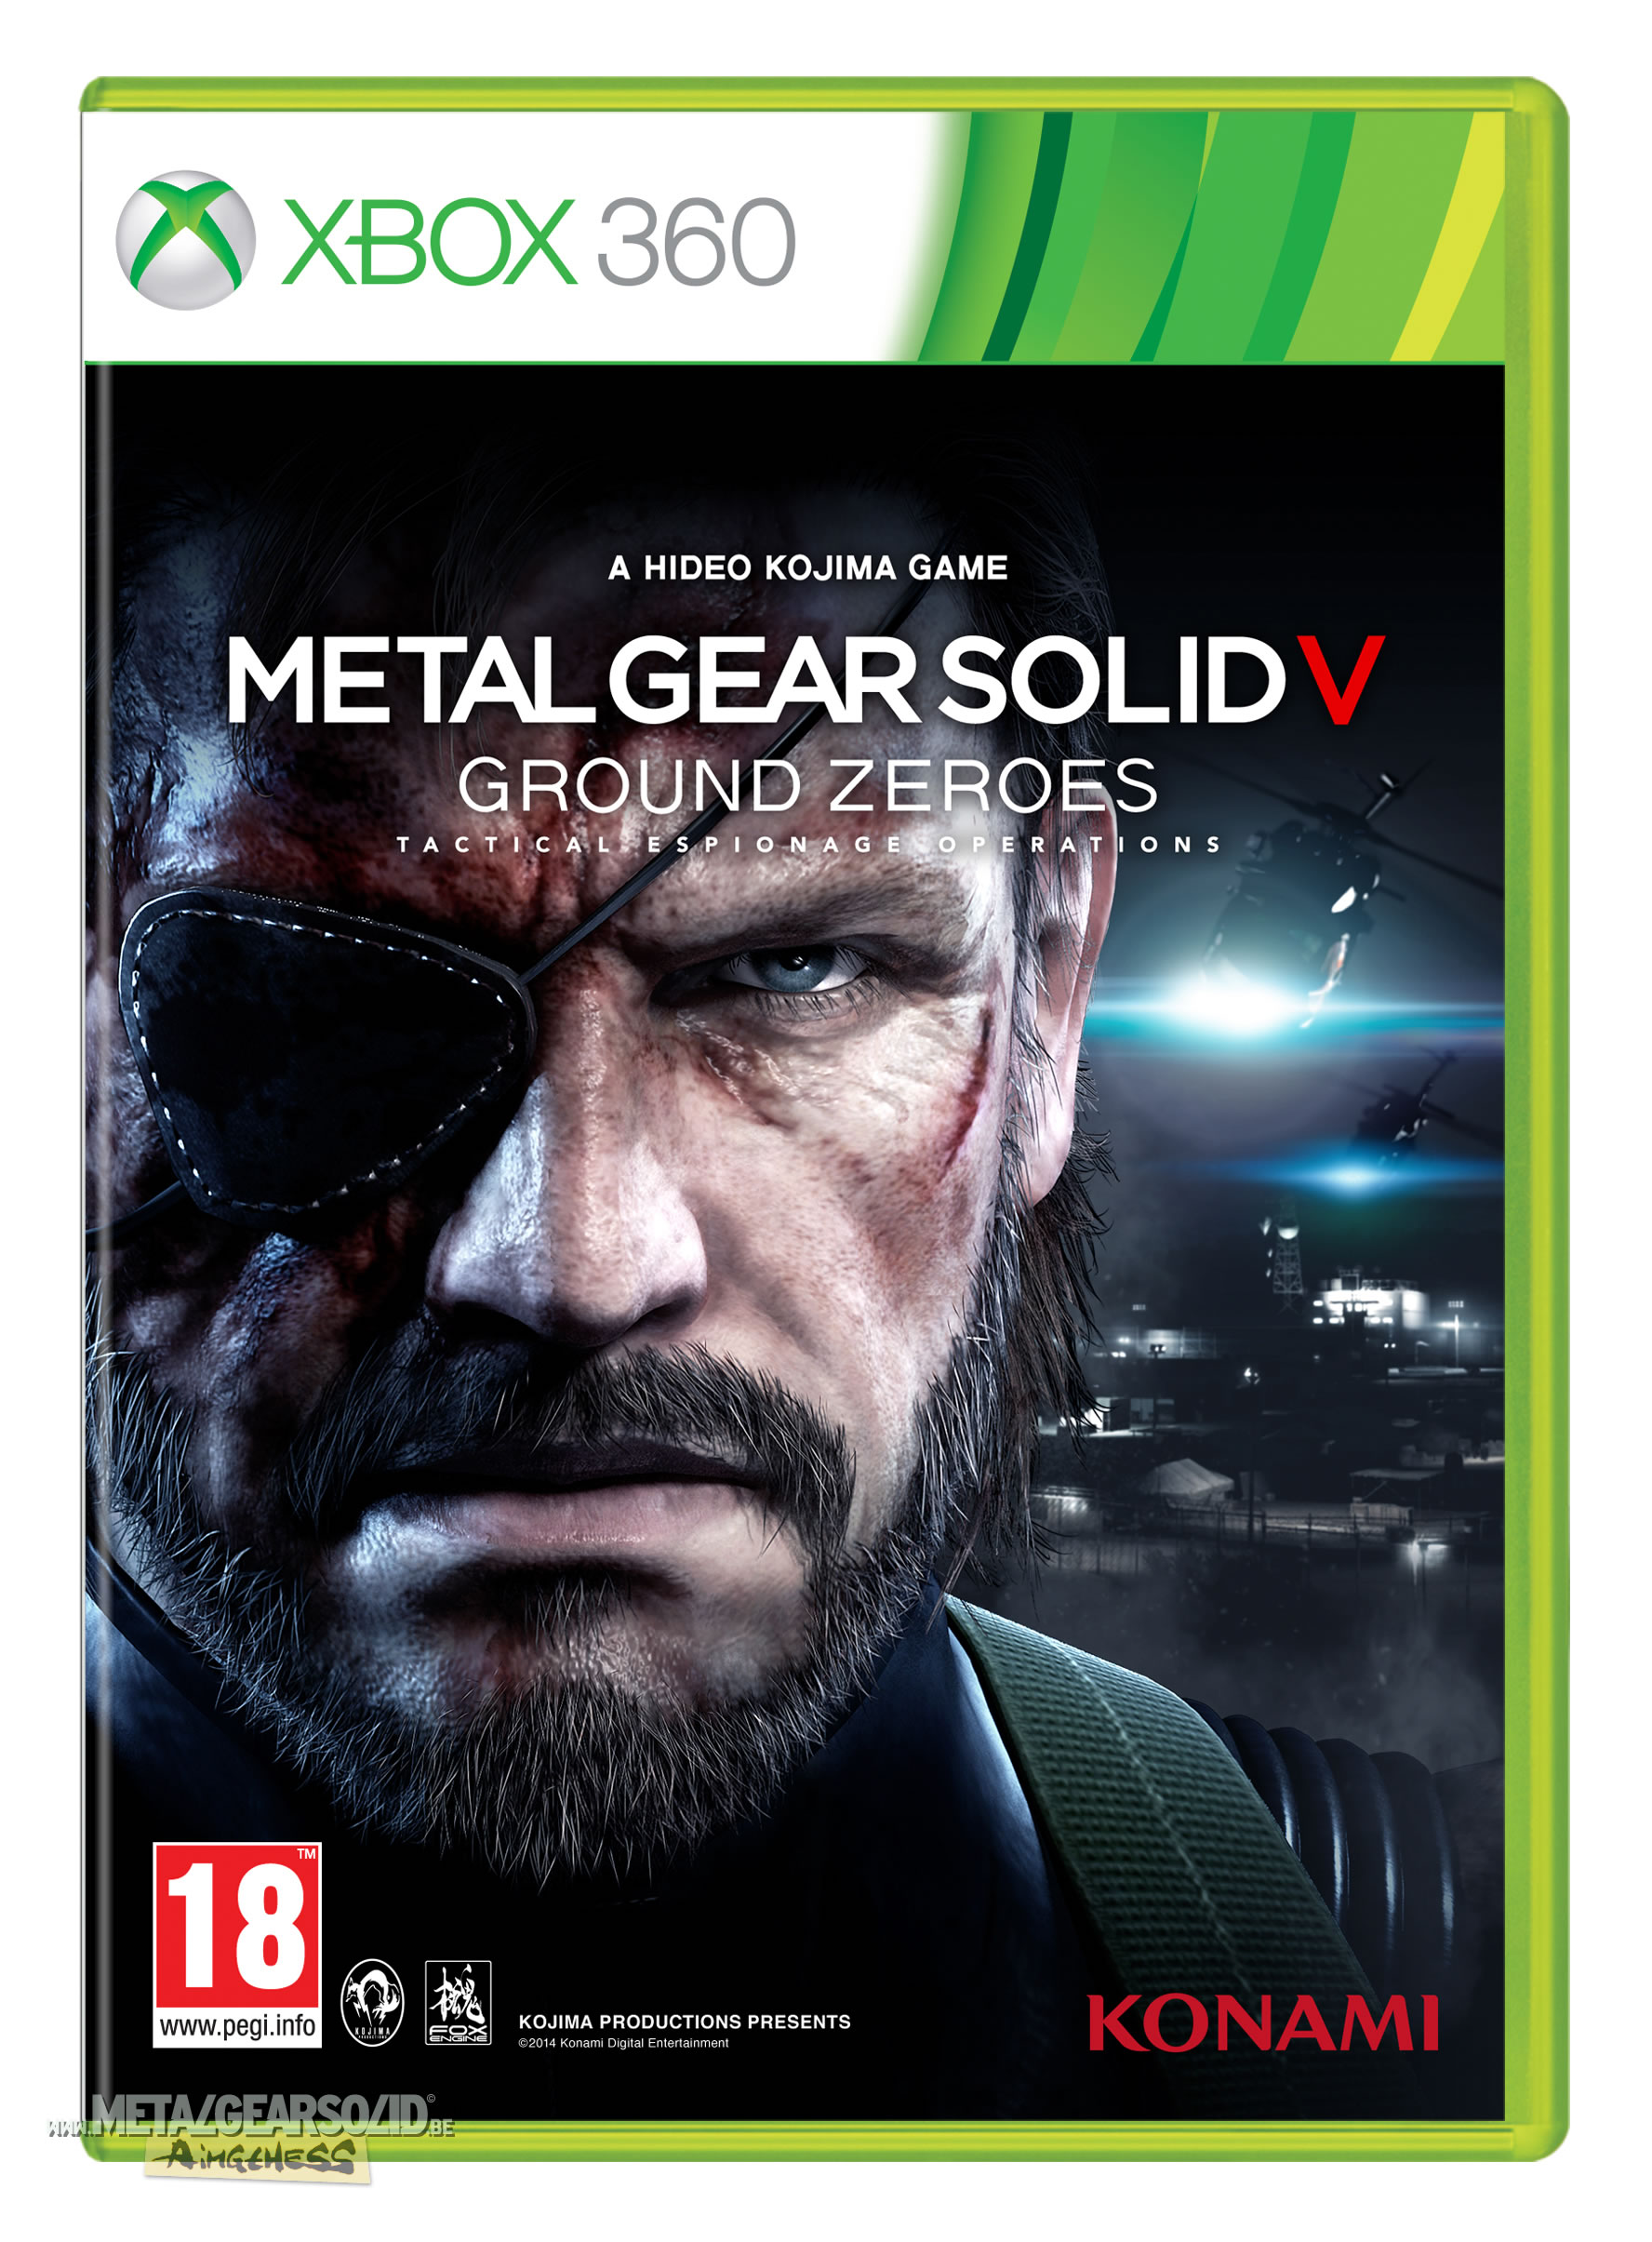 La jaquette Xbox 360 europenne de Metal Gear Solid V : Ground Zeroes